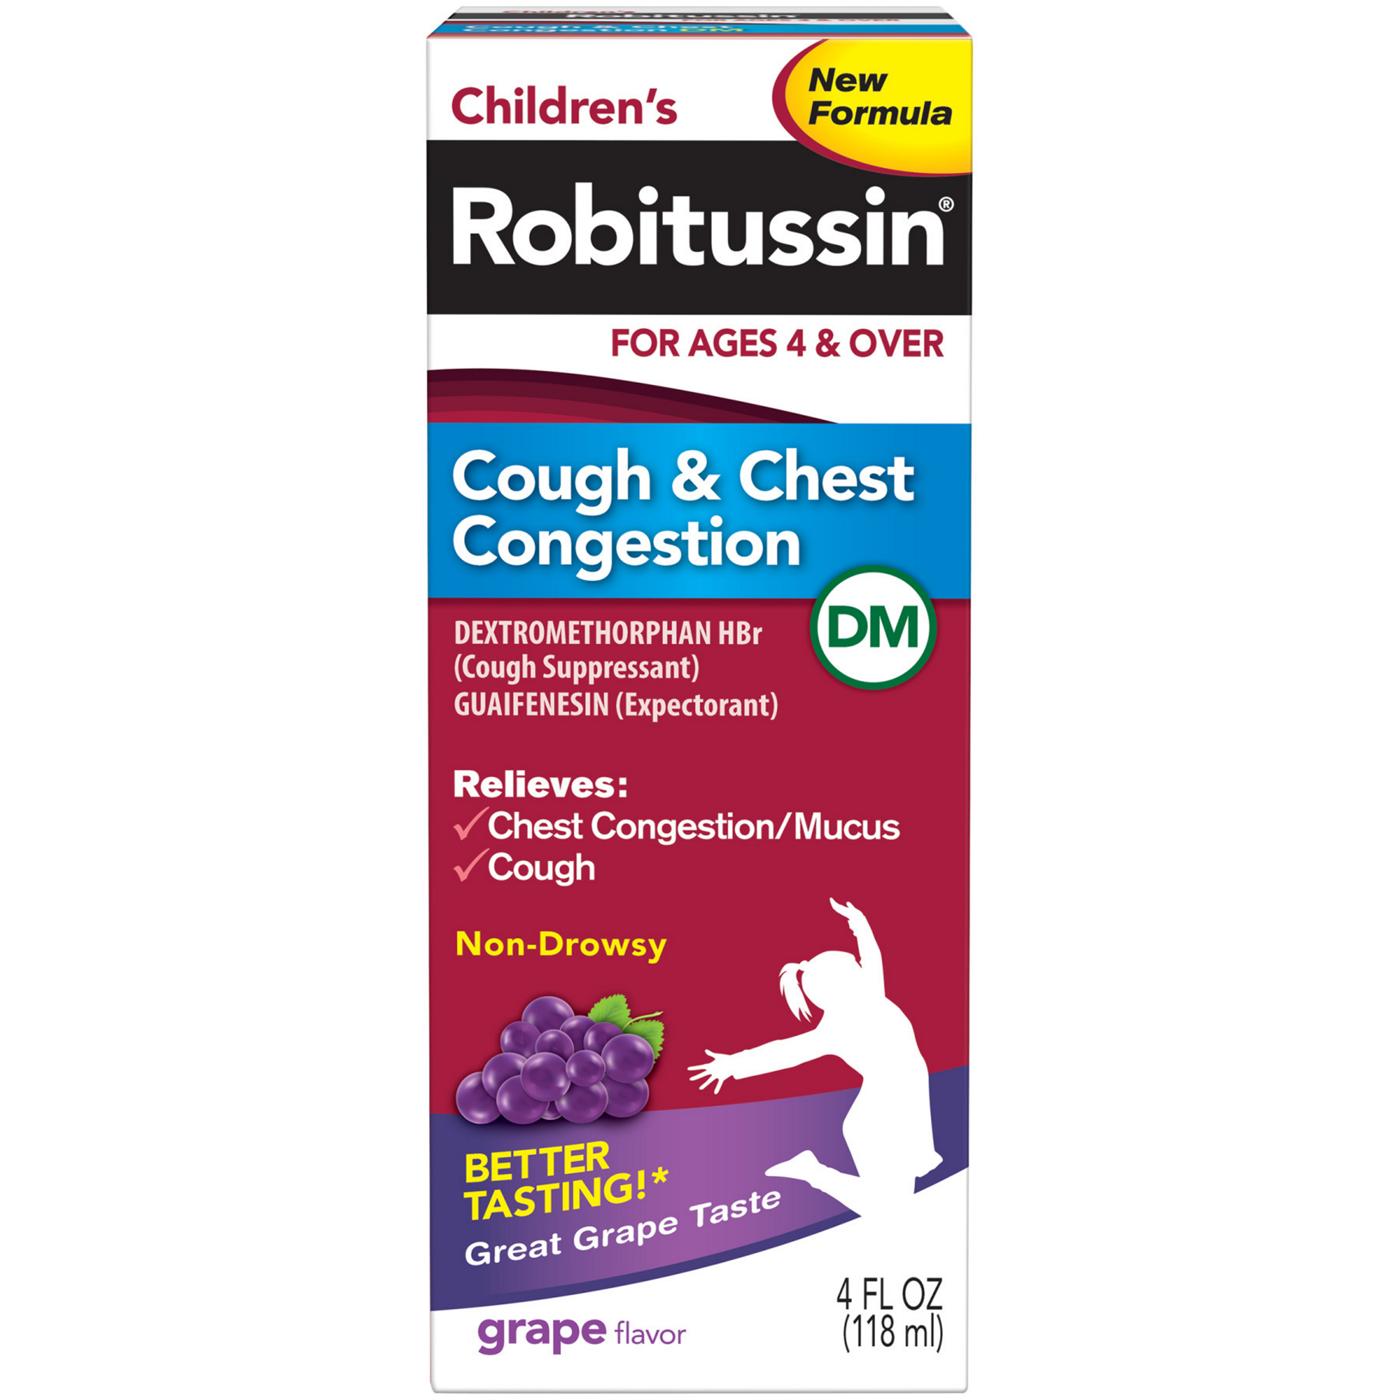 Robitussin Children's Cough & Chest Congestion DM Liquid - Grape; image 1 of 7